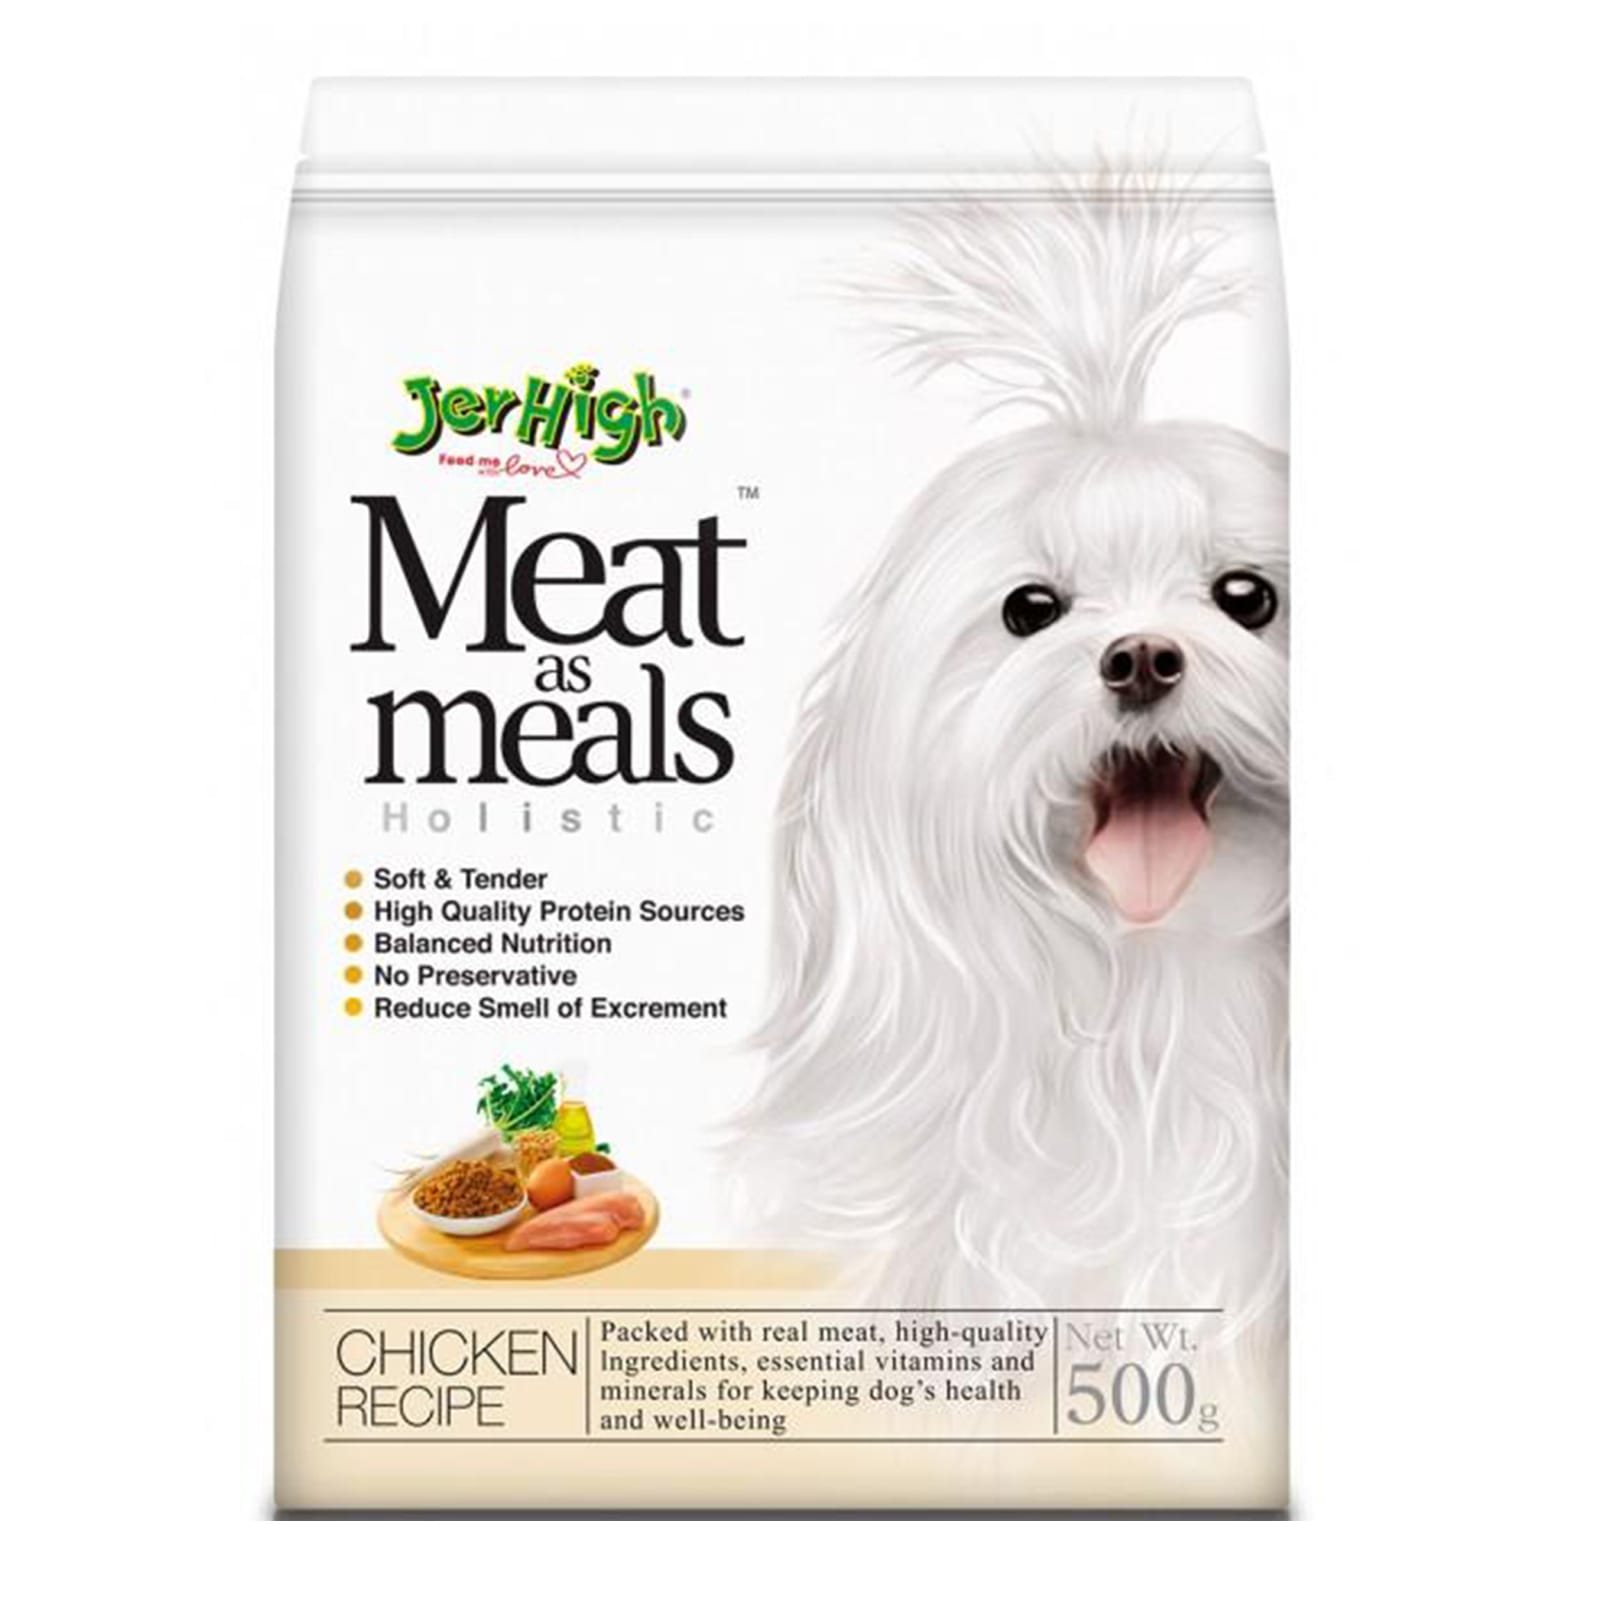 Jerhigh-meat as Meals (Chicken Recipe)-500g